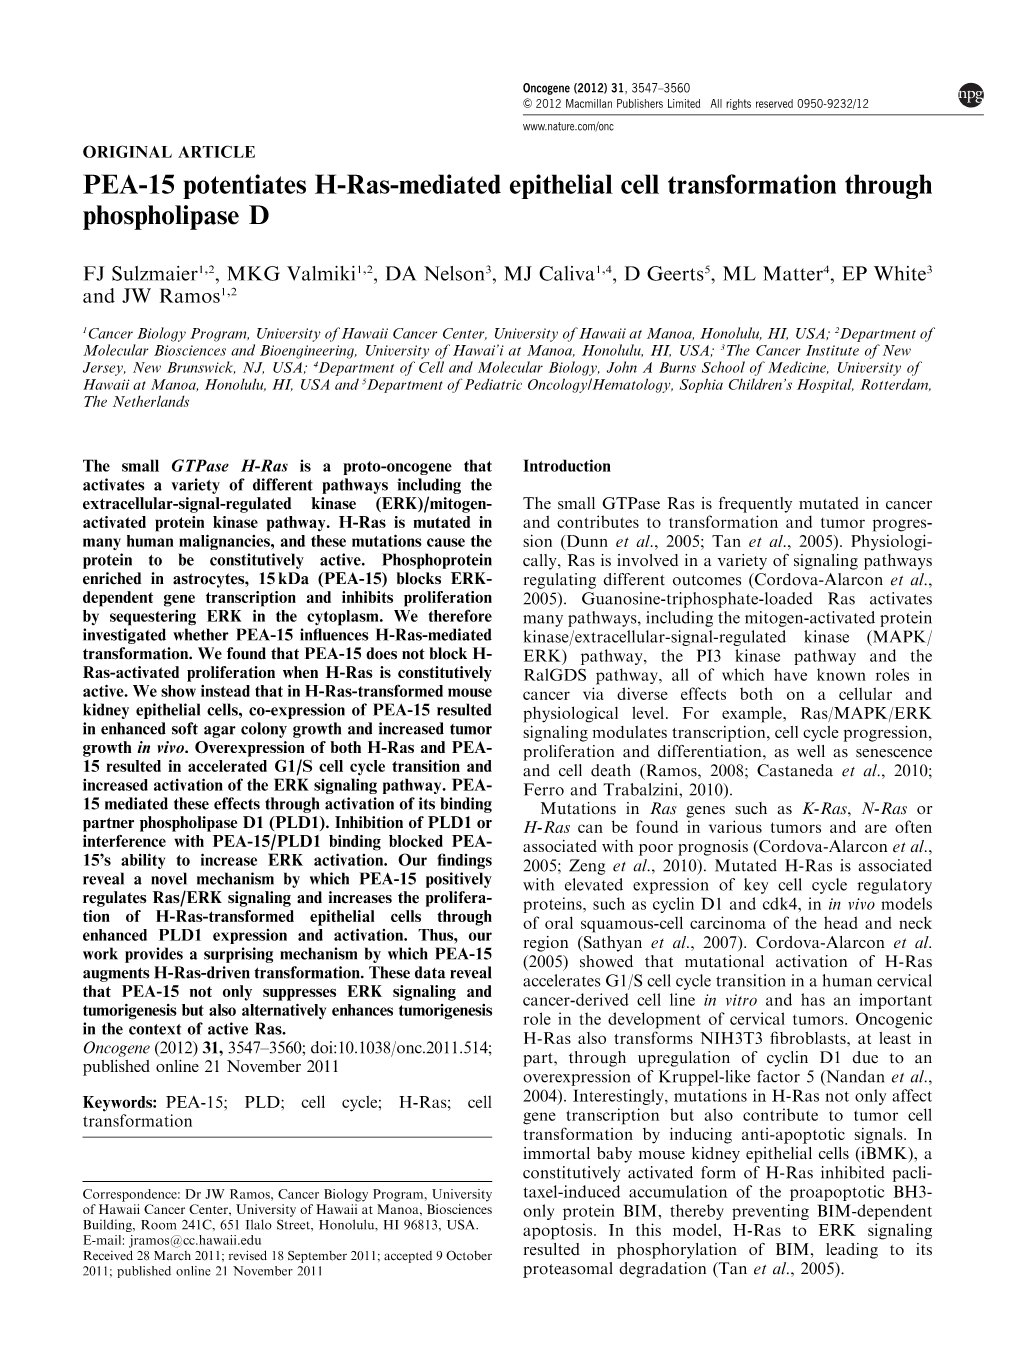 PEA-15 Potentiates H-Ras-Mediated Epithelial Cell Transformation Through Phospholipase D